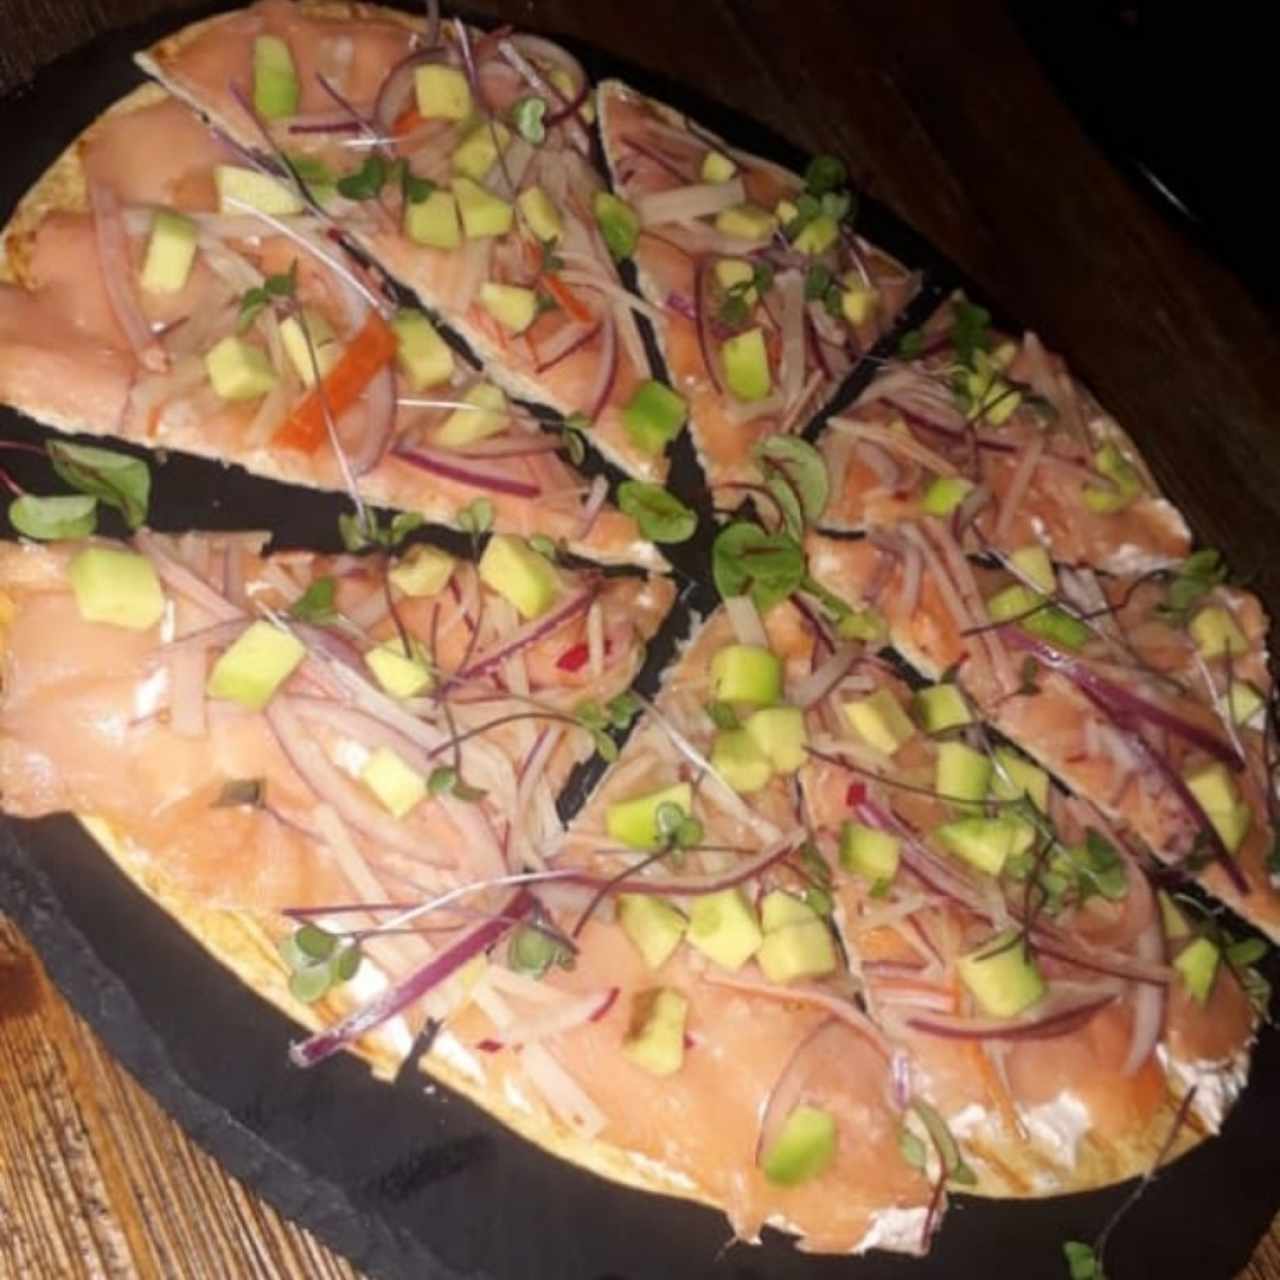 SMALL PLATES - Smoked Salmon Pizza